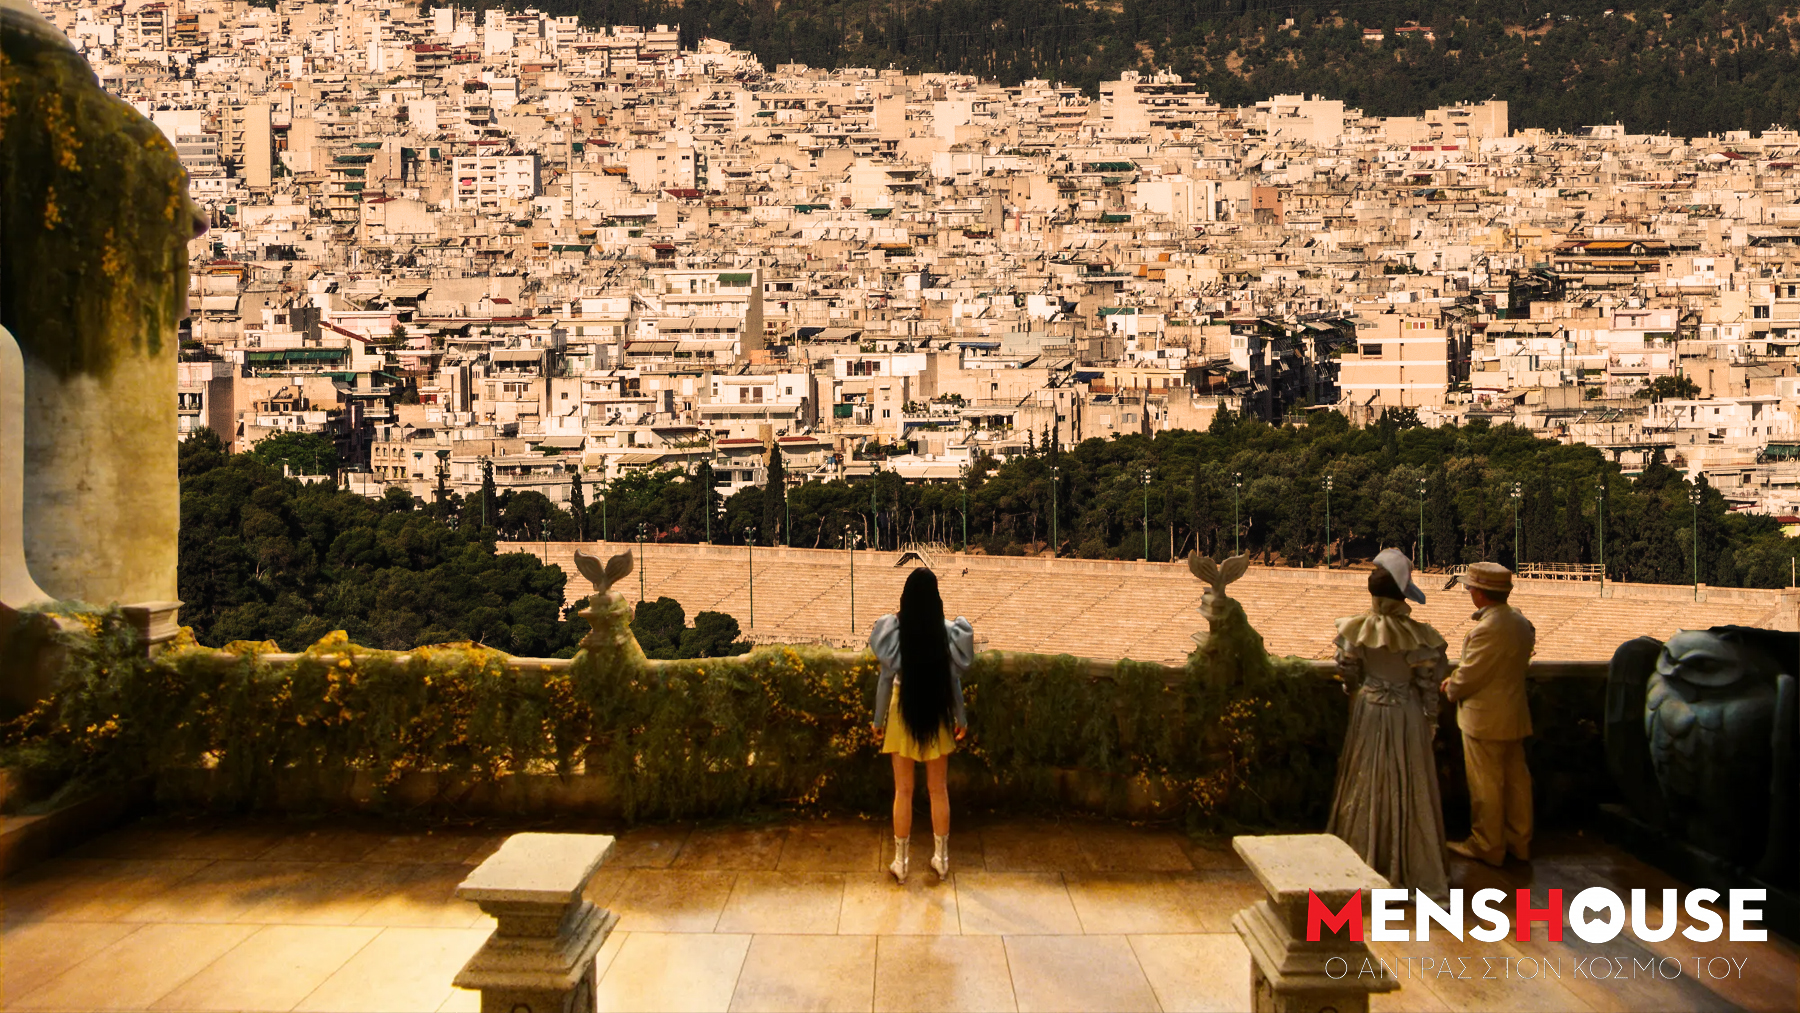 Poor Things: Τα 7 πλάνα από την ταινία του Λάνθιμου που έπεισαν τους Έλληνες ότι αξίζει το Όσκαρ (Pics)